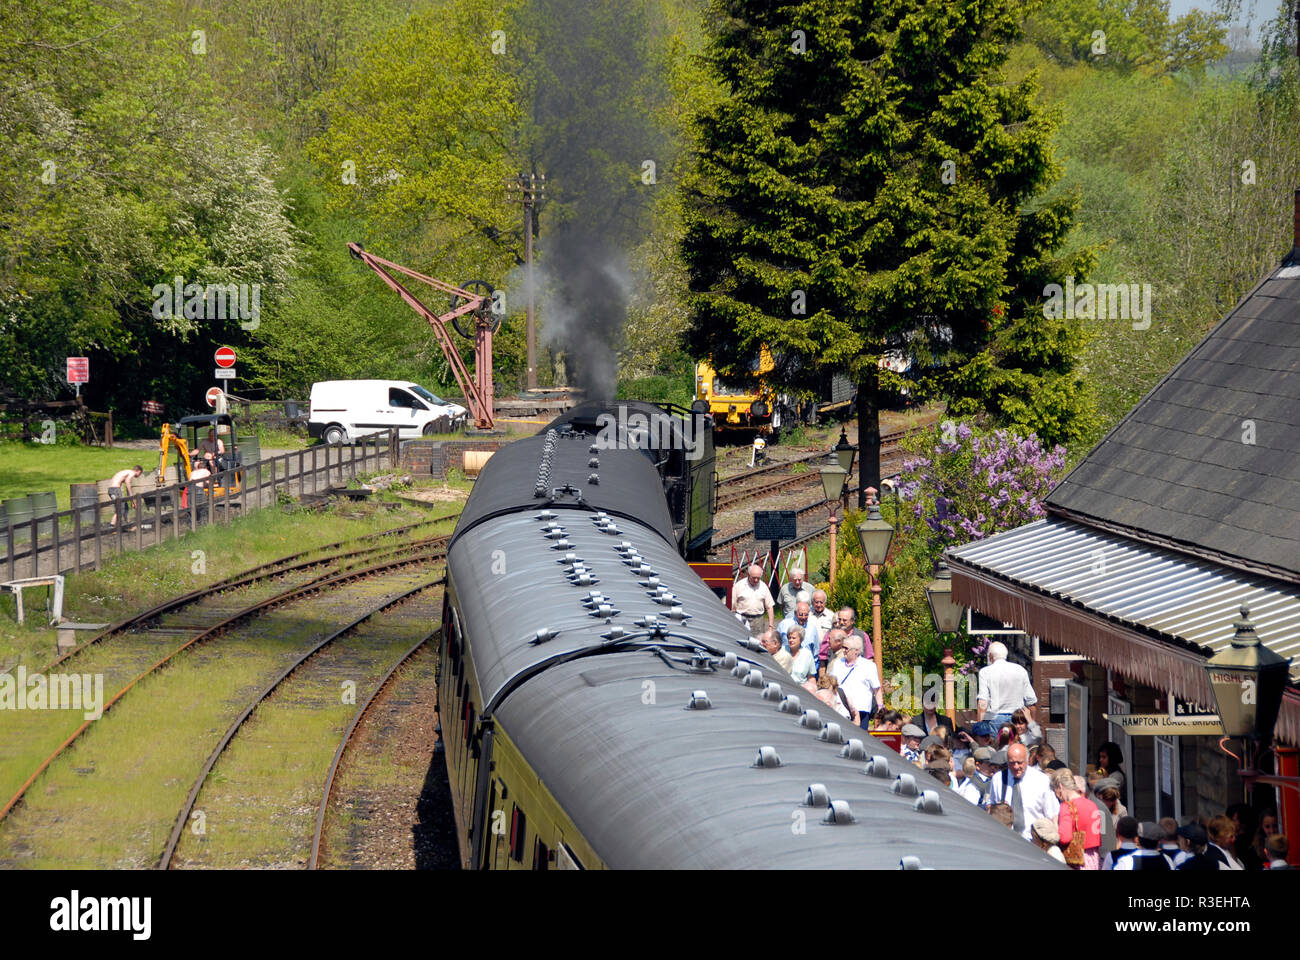 Passagers débarqués Le Royal Scot train à la gare de Shrewsbury, Shropshire, Angleterre Banque D'Images